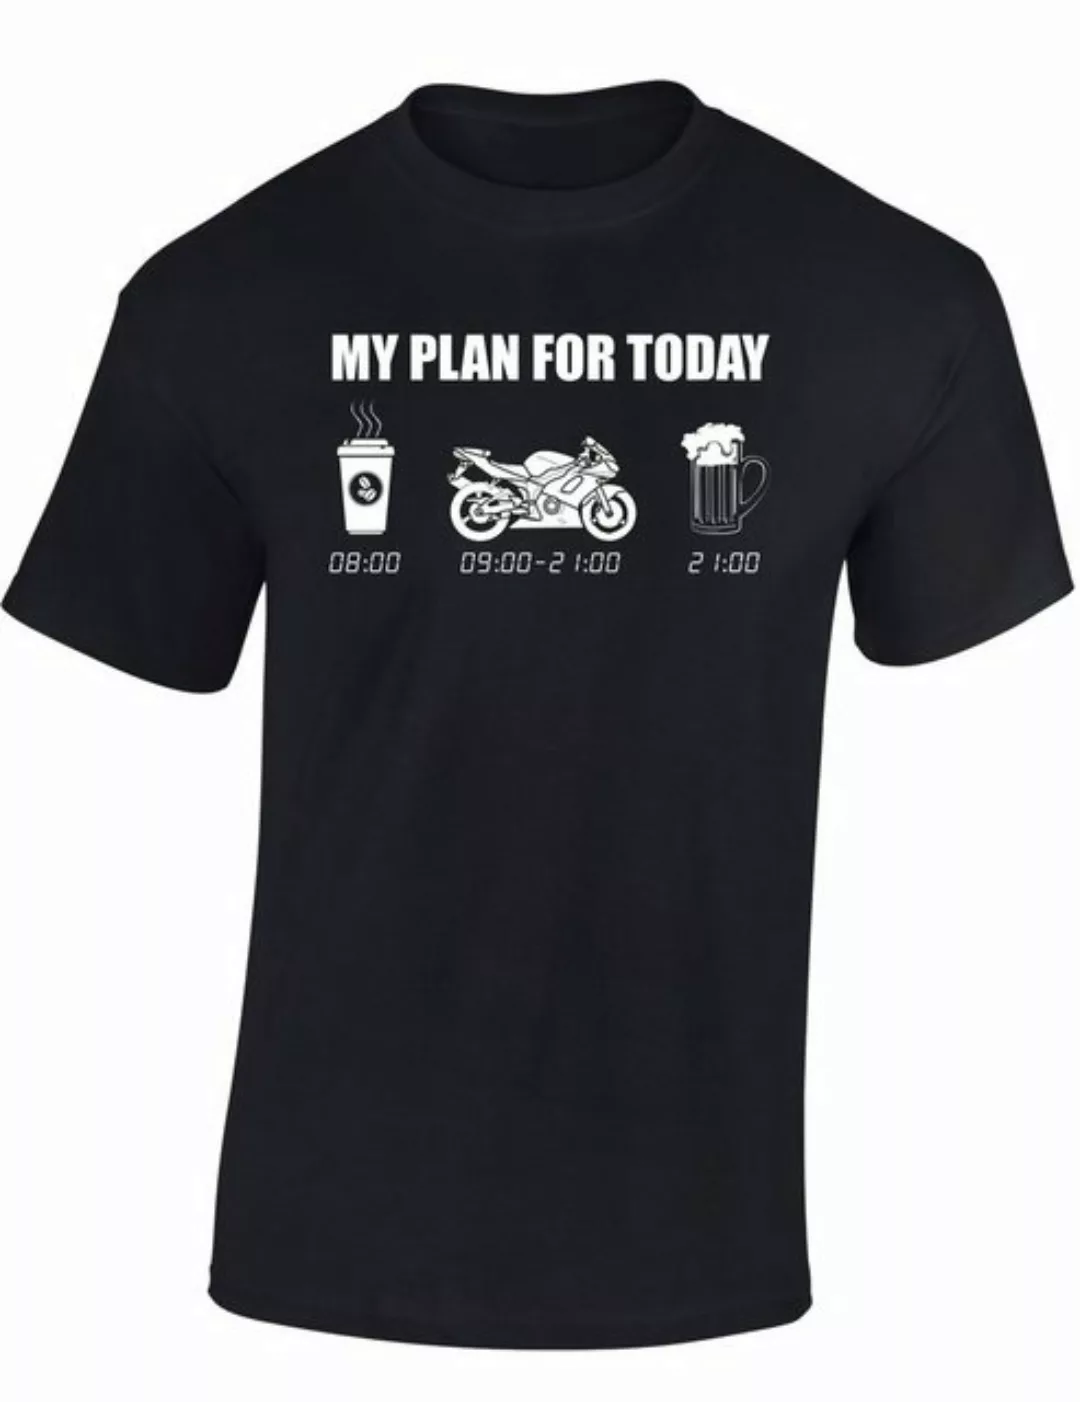 Baddery Print-Shirt Biker T-Shirt: "My plan for today - Motorrad", hochwert günstig online kaufen